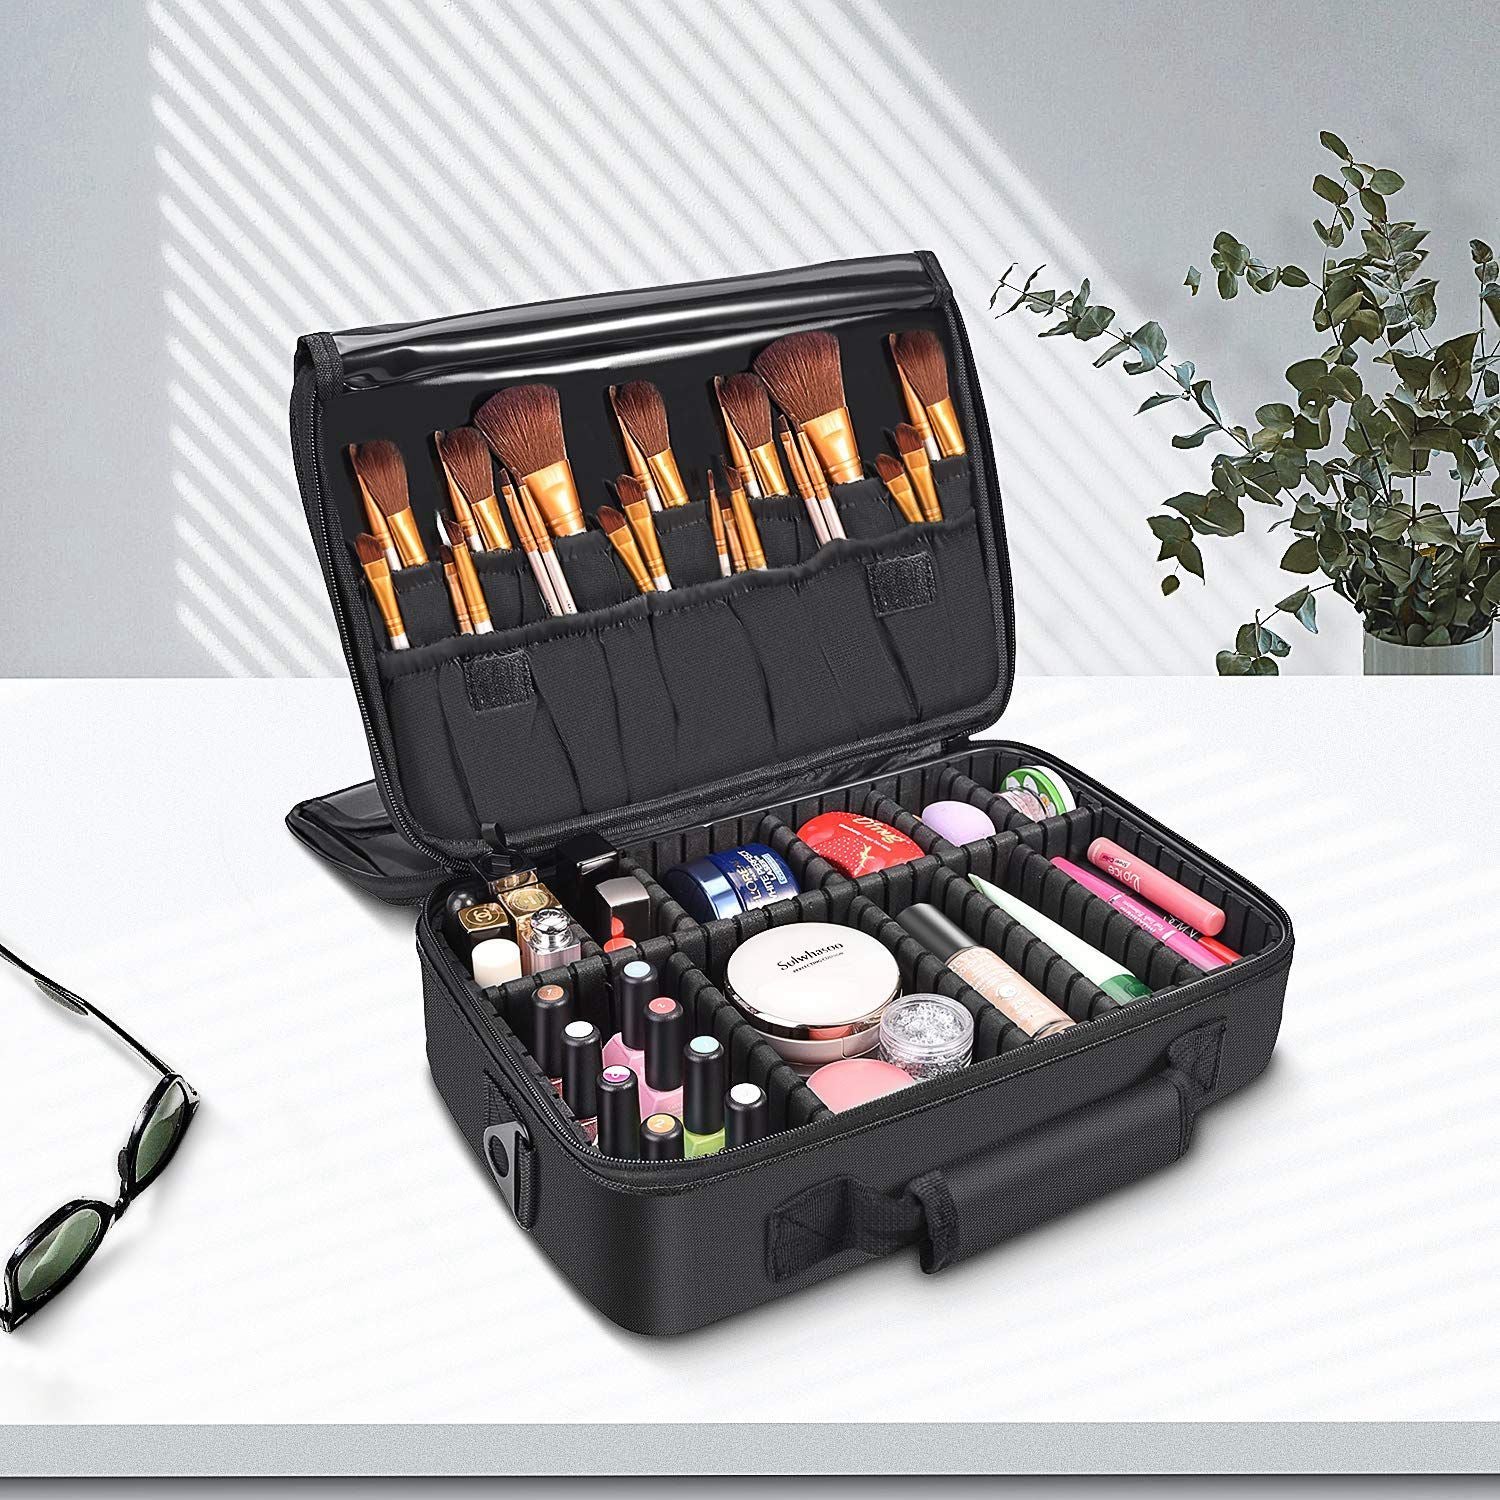 Makeup Train Case-3 Layers Waterproof Travel Makeup Bag Cosmetic Organizer Kit Artist Storage Case Brush Holder with Adju - ebowsos